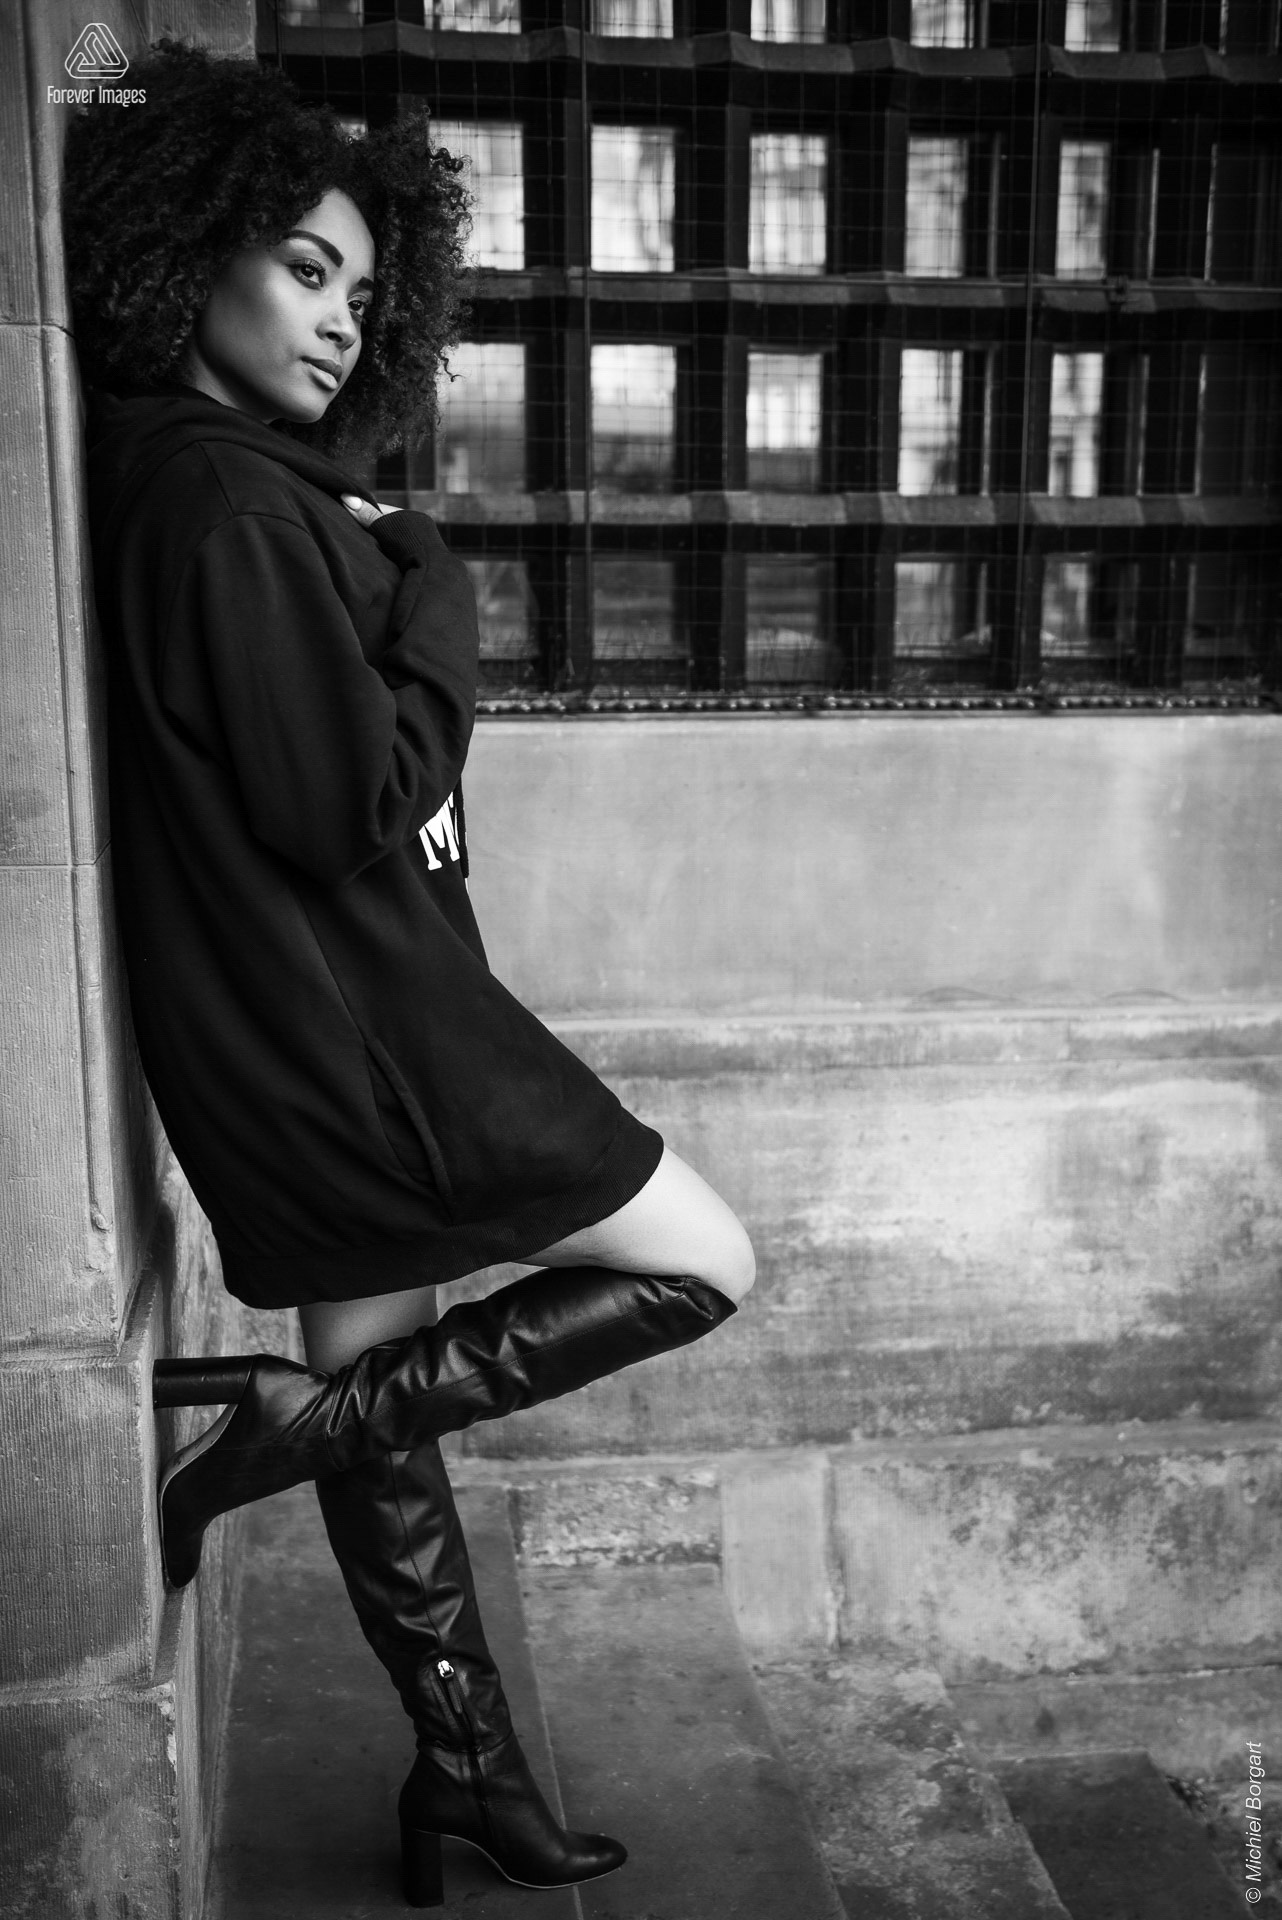 Portretfoto zwart-wit No Longer Slaves | Channah Hewitt De Dam Amsterdam Koninklijk Paleis | Portretfotograaf Michiel Borgart - Forever Images.